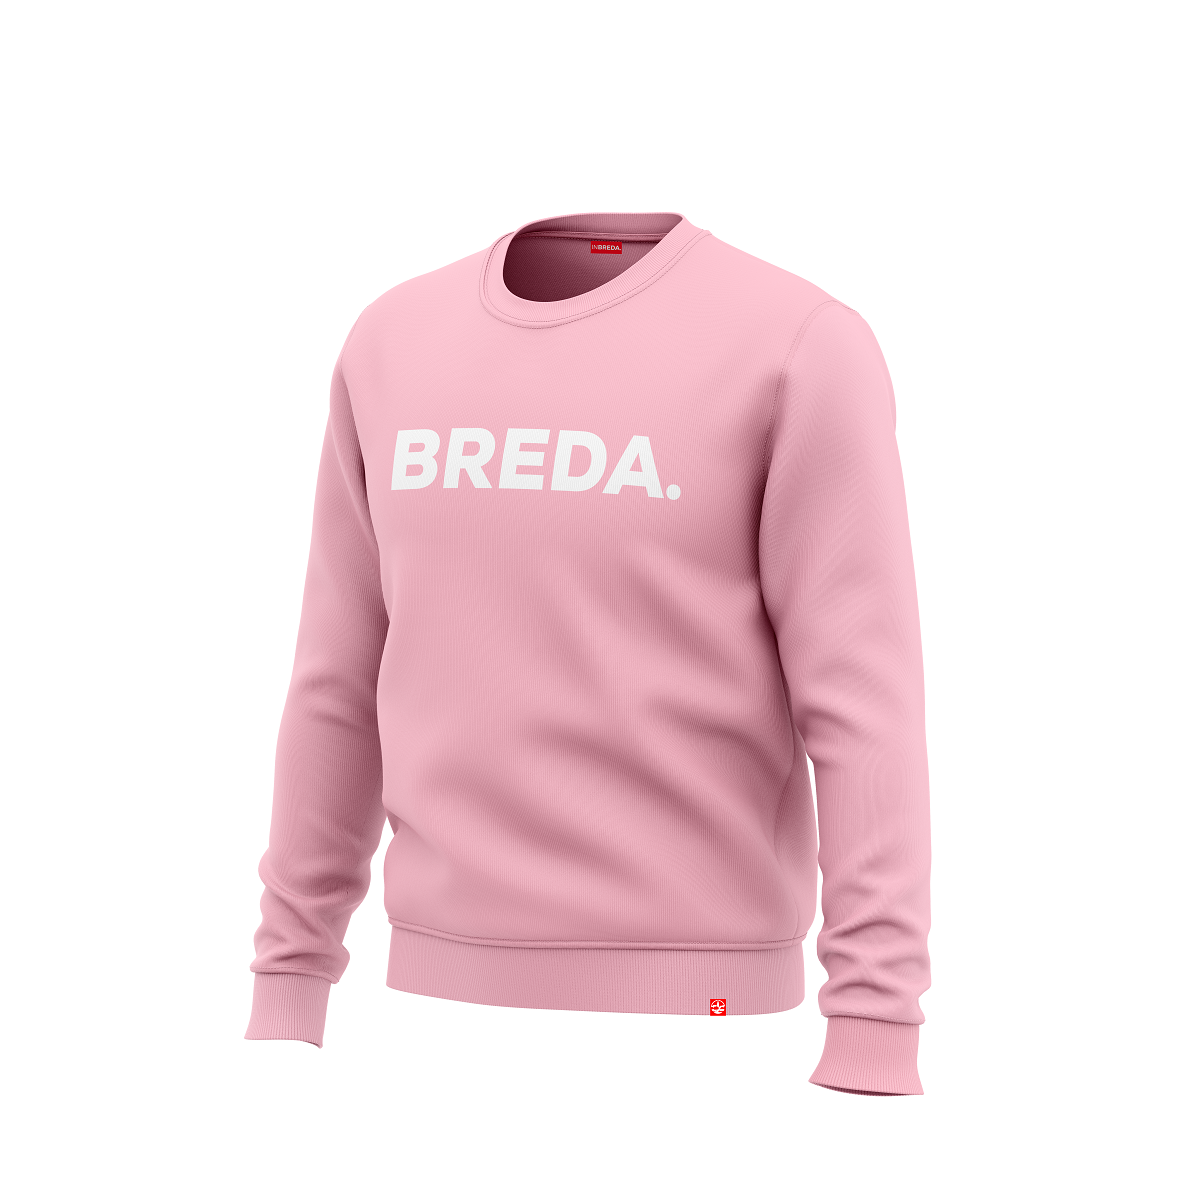 Virus pond knop Sweater BREDA. - shopinbreda